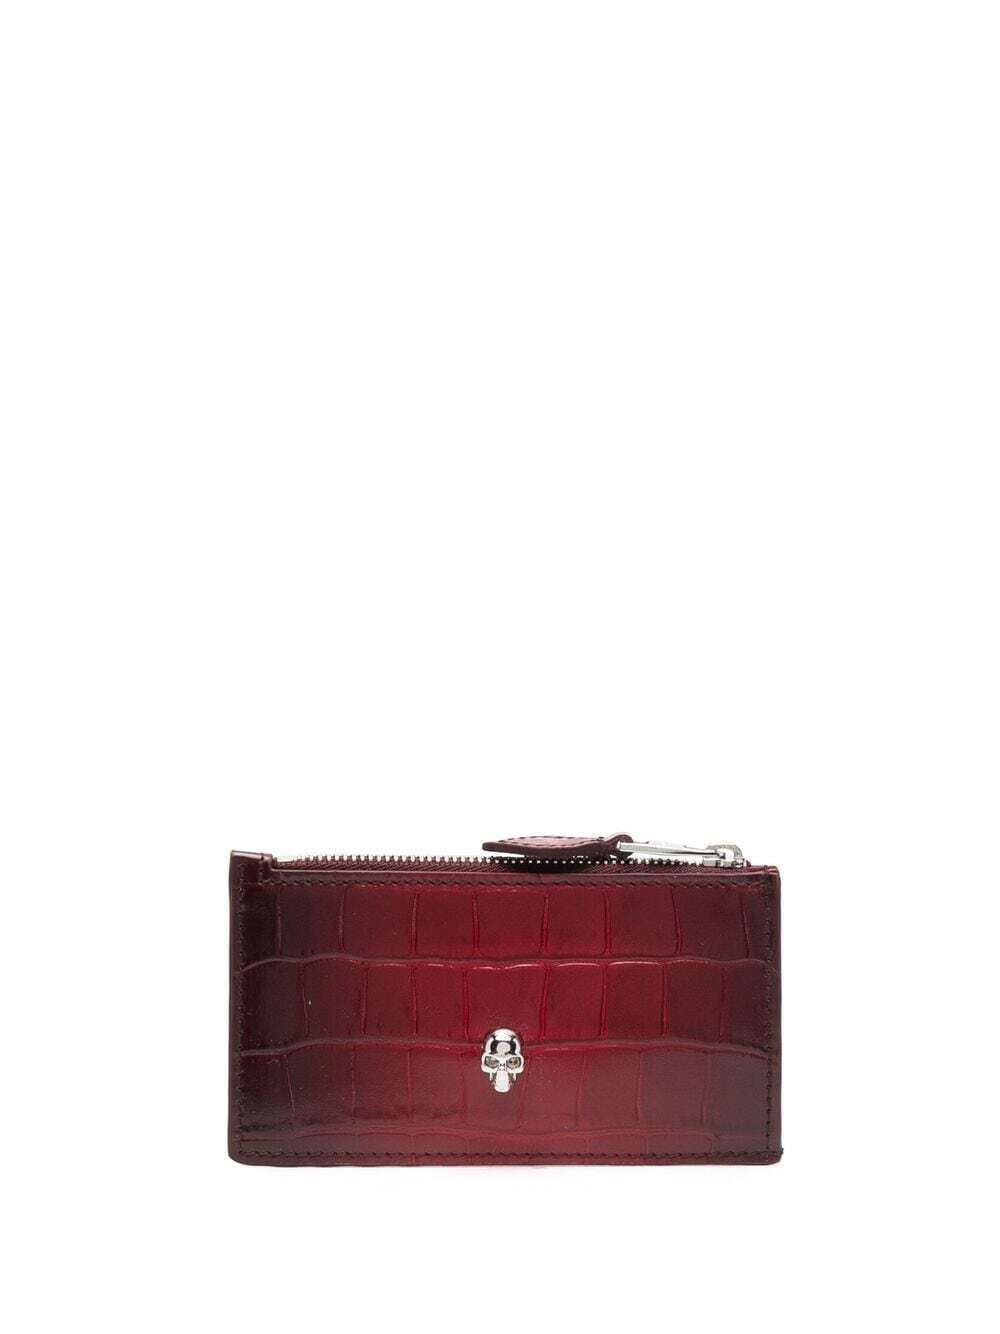 Alexander McQueen croc-effect calf leather purse - Red